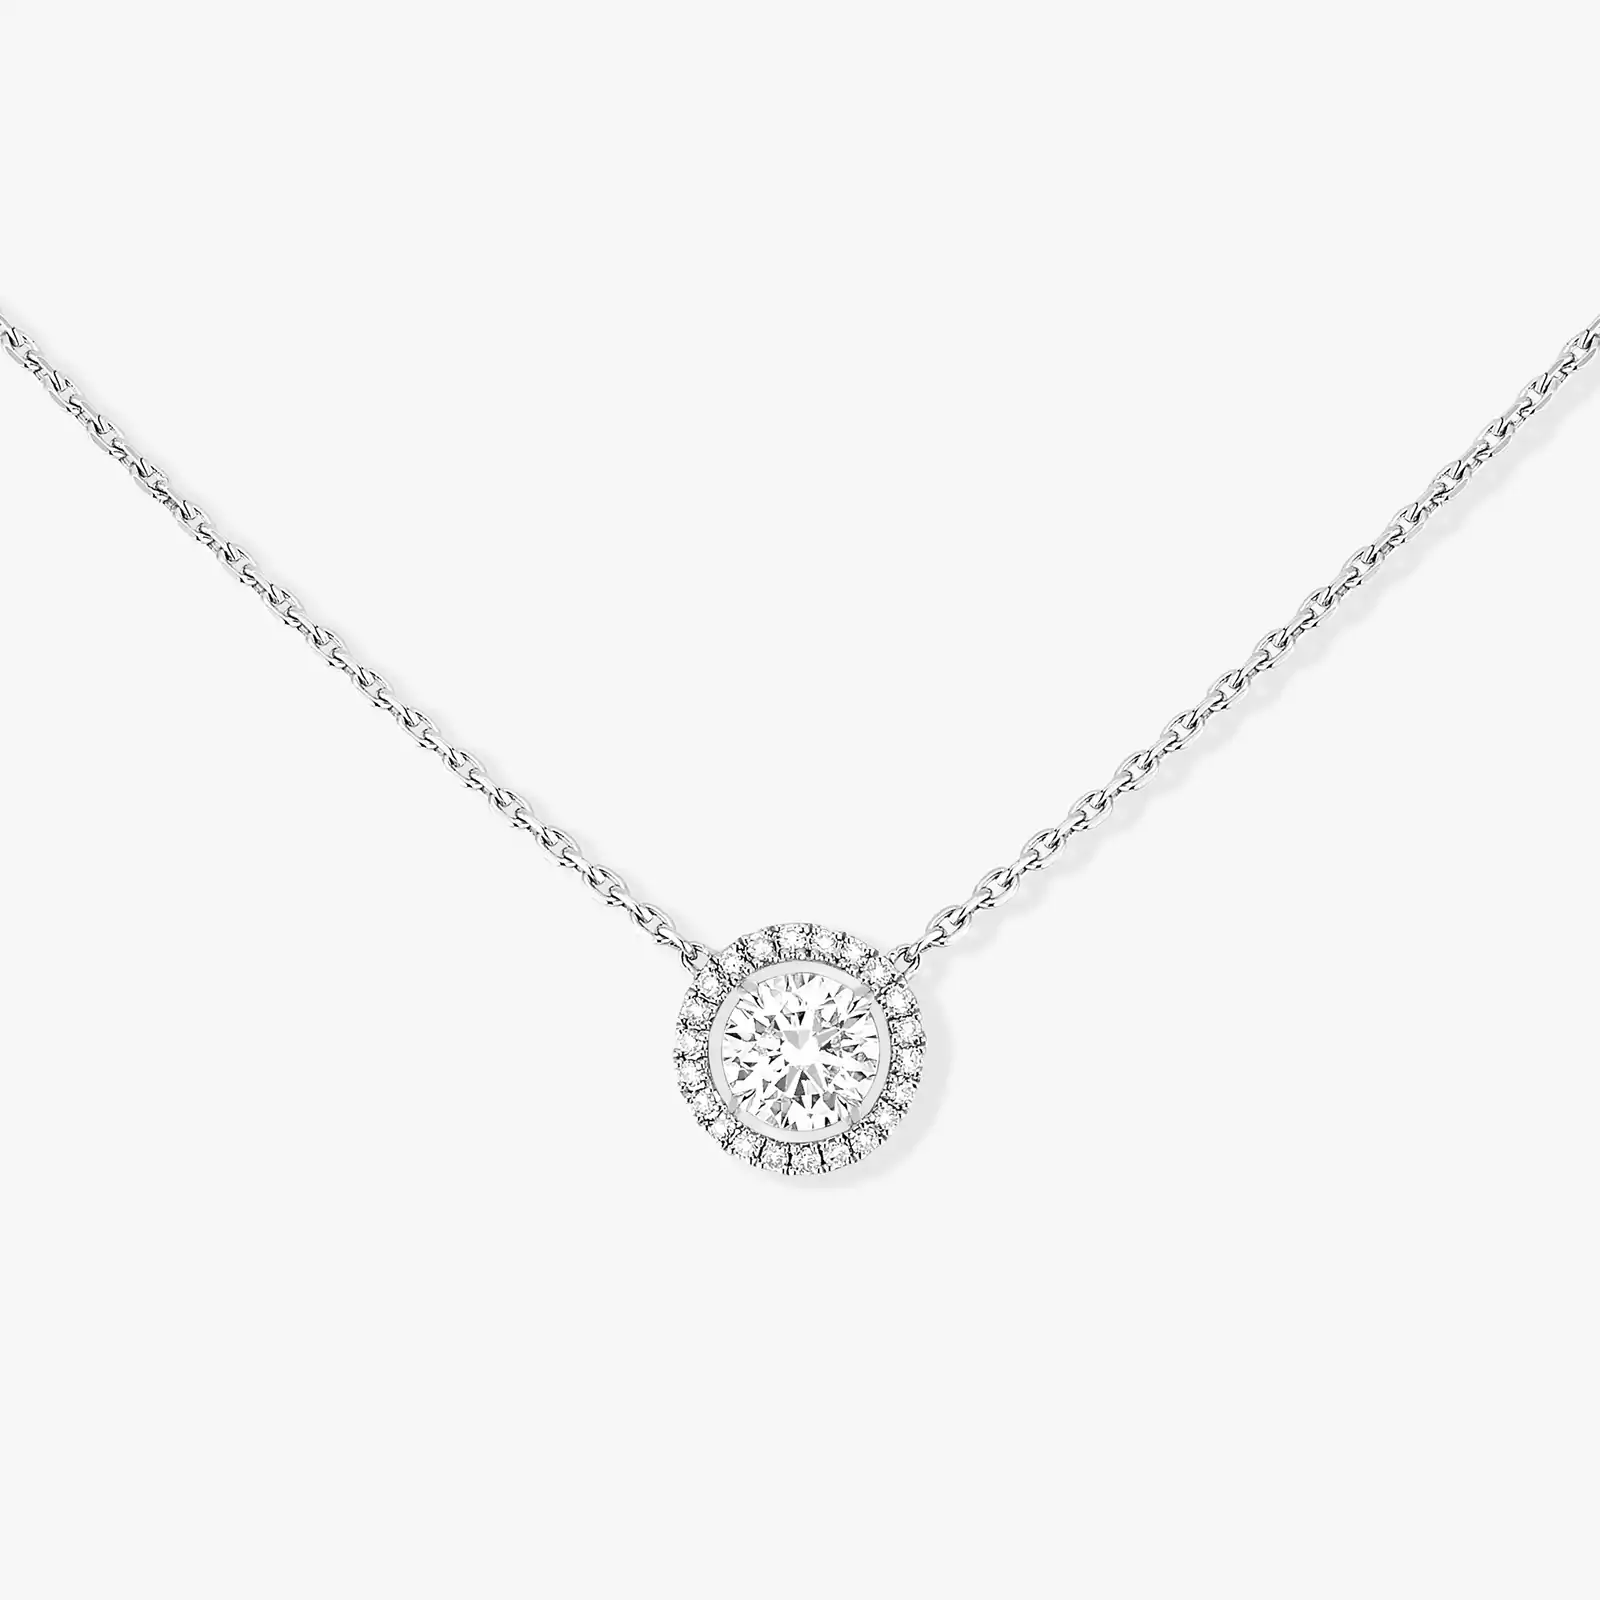 Solitaire M-Love Brillant White Gold For Her Diamond Necklace 08611-WG